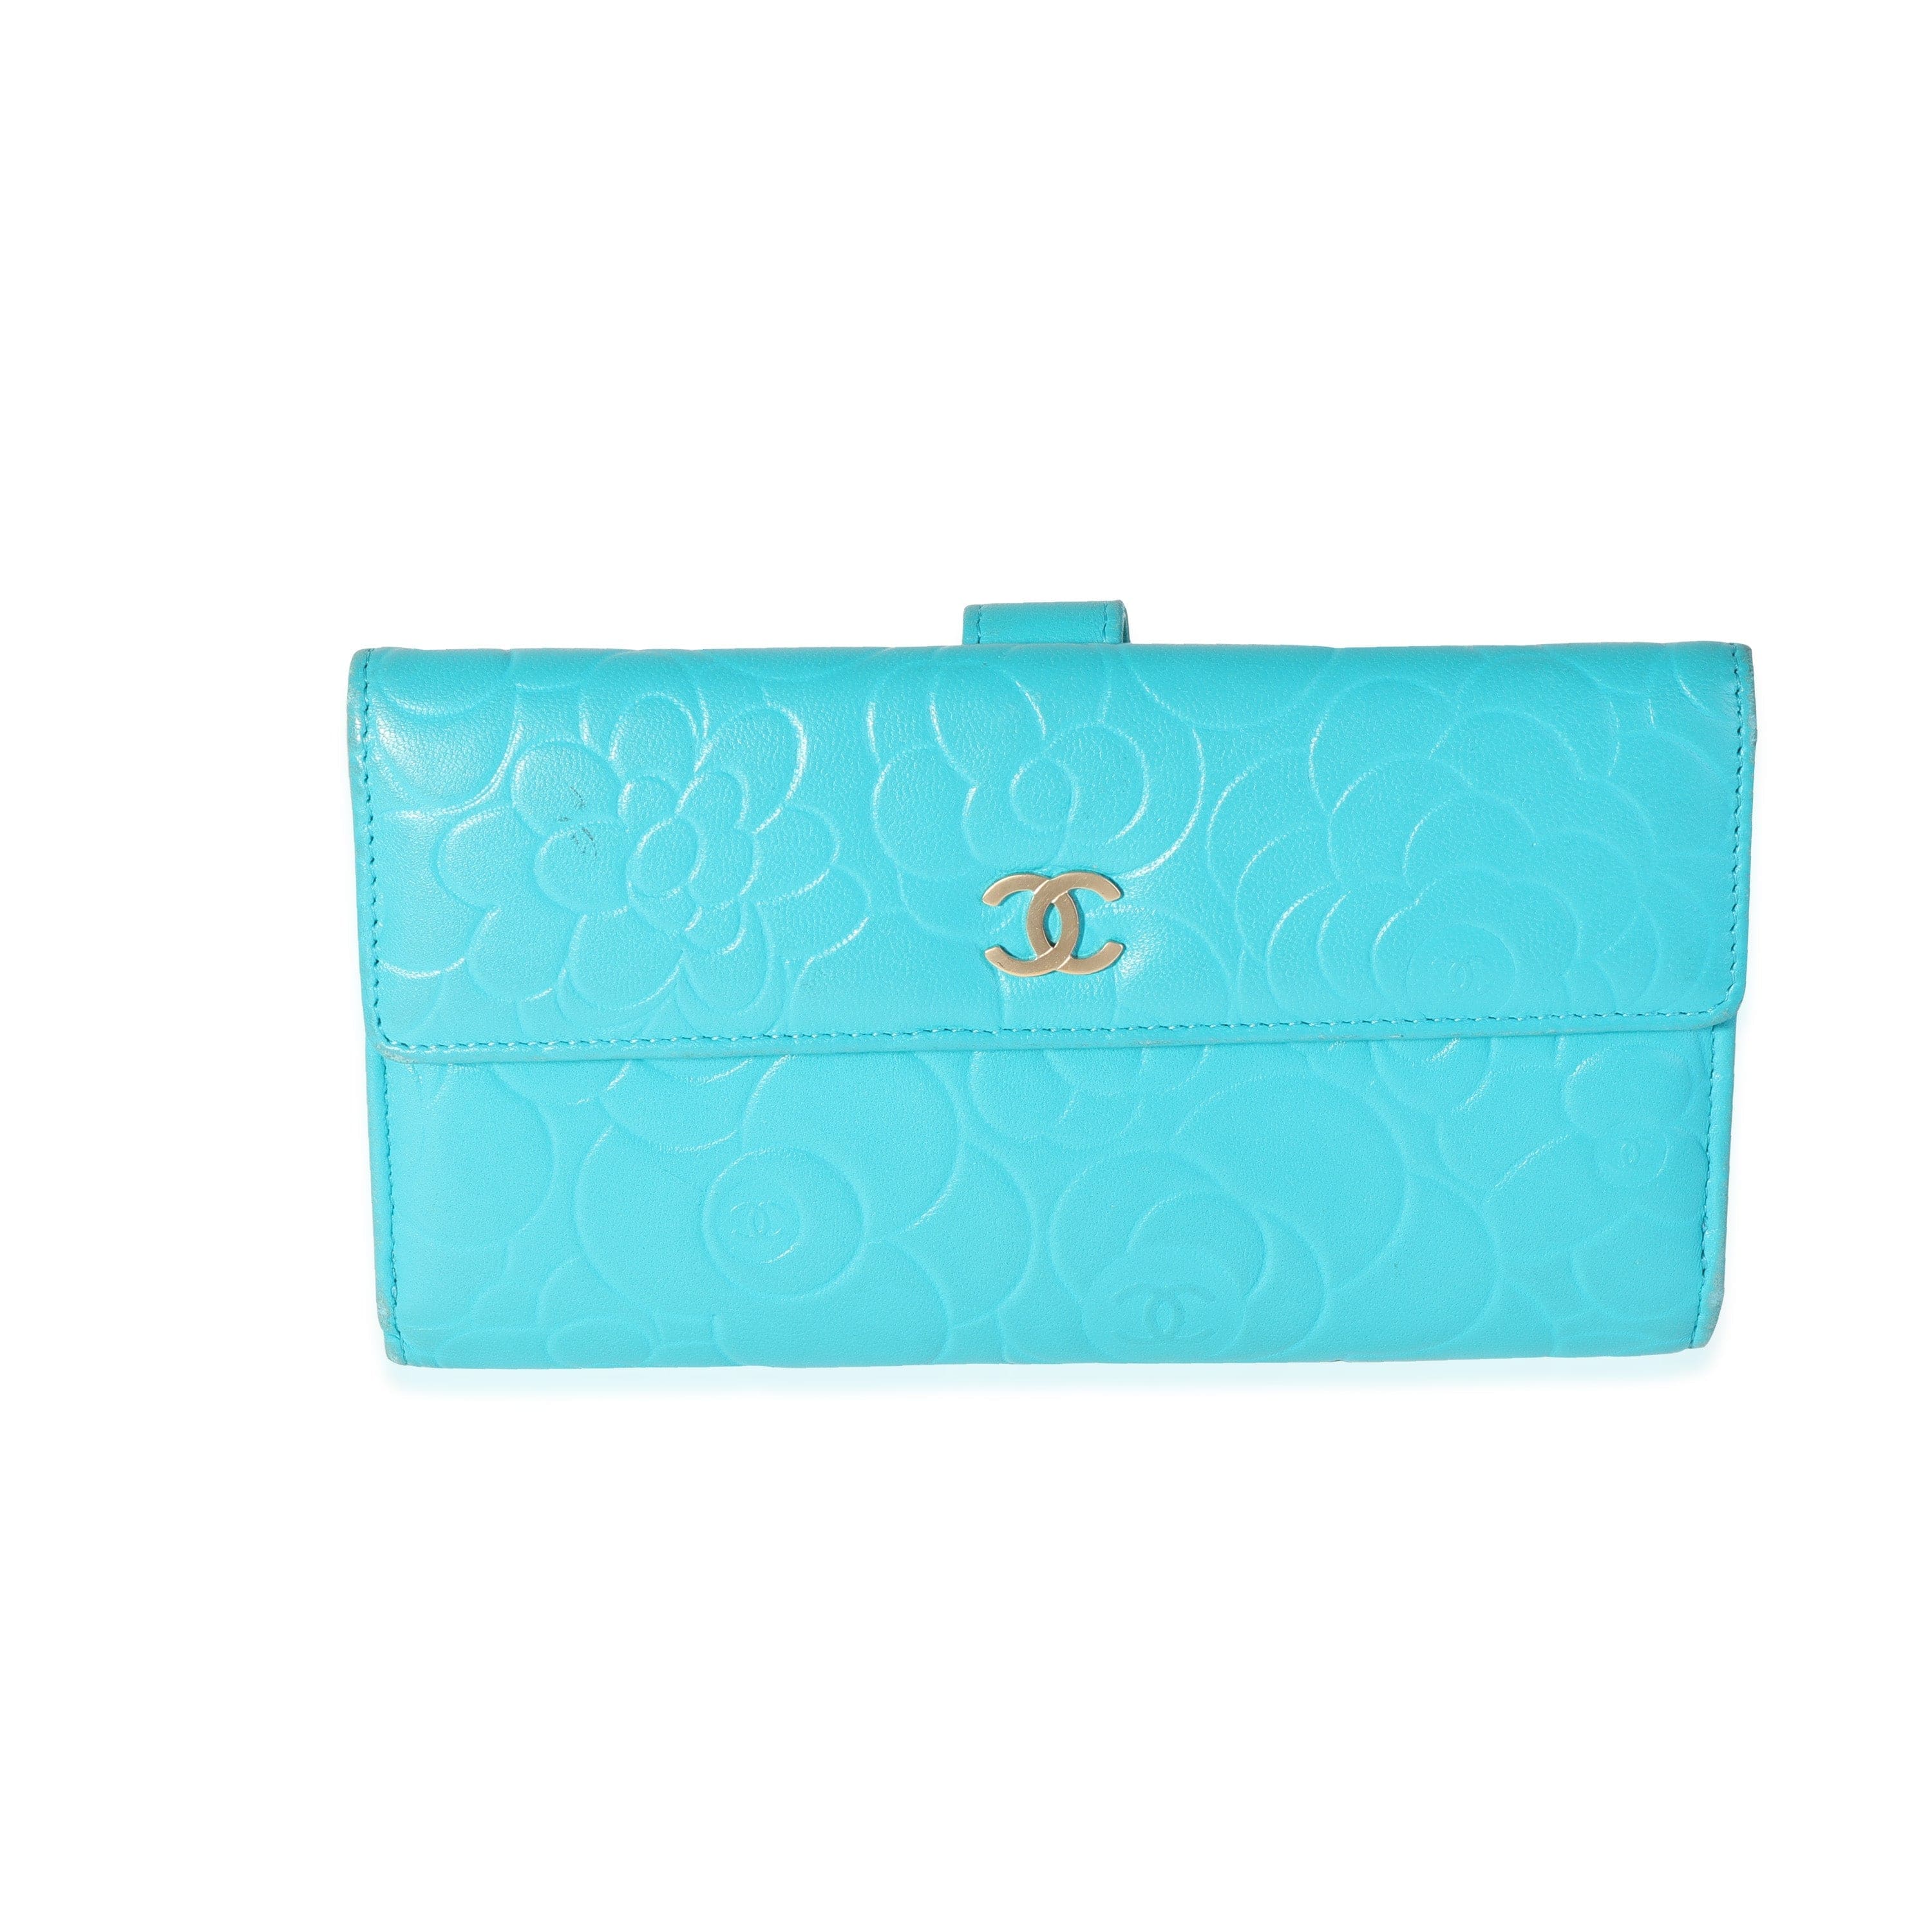 Chanel Chanel Teal Camellia-Embossed Lambskin Wallet